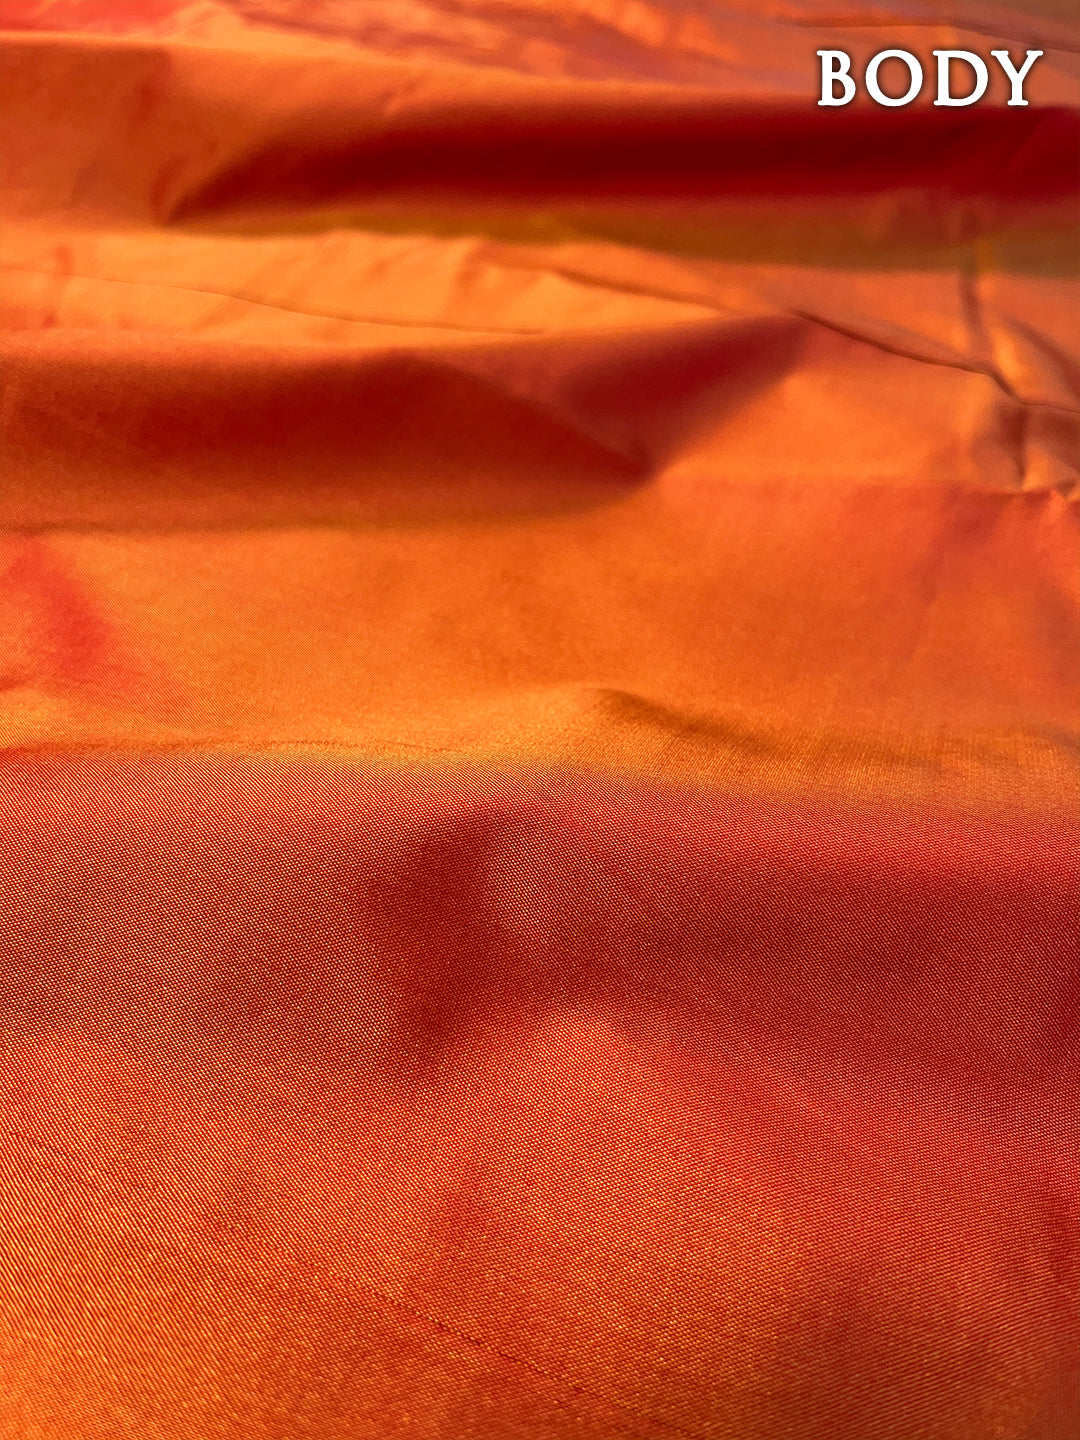 Dual color of green and maroon kanchipuram semi soft silk saree